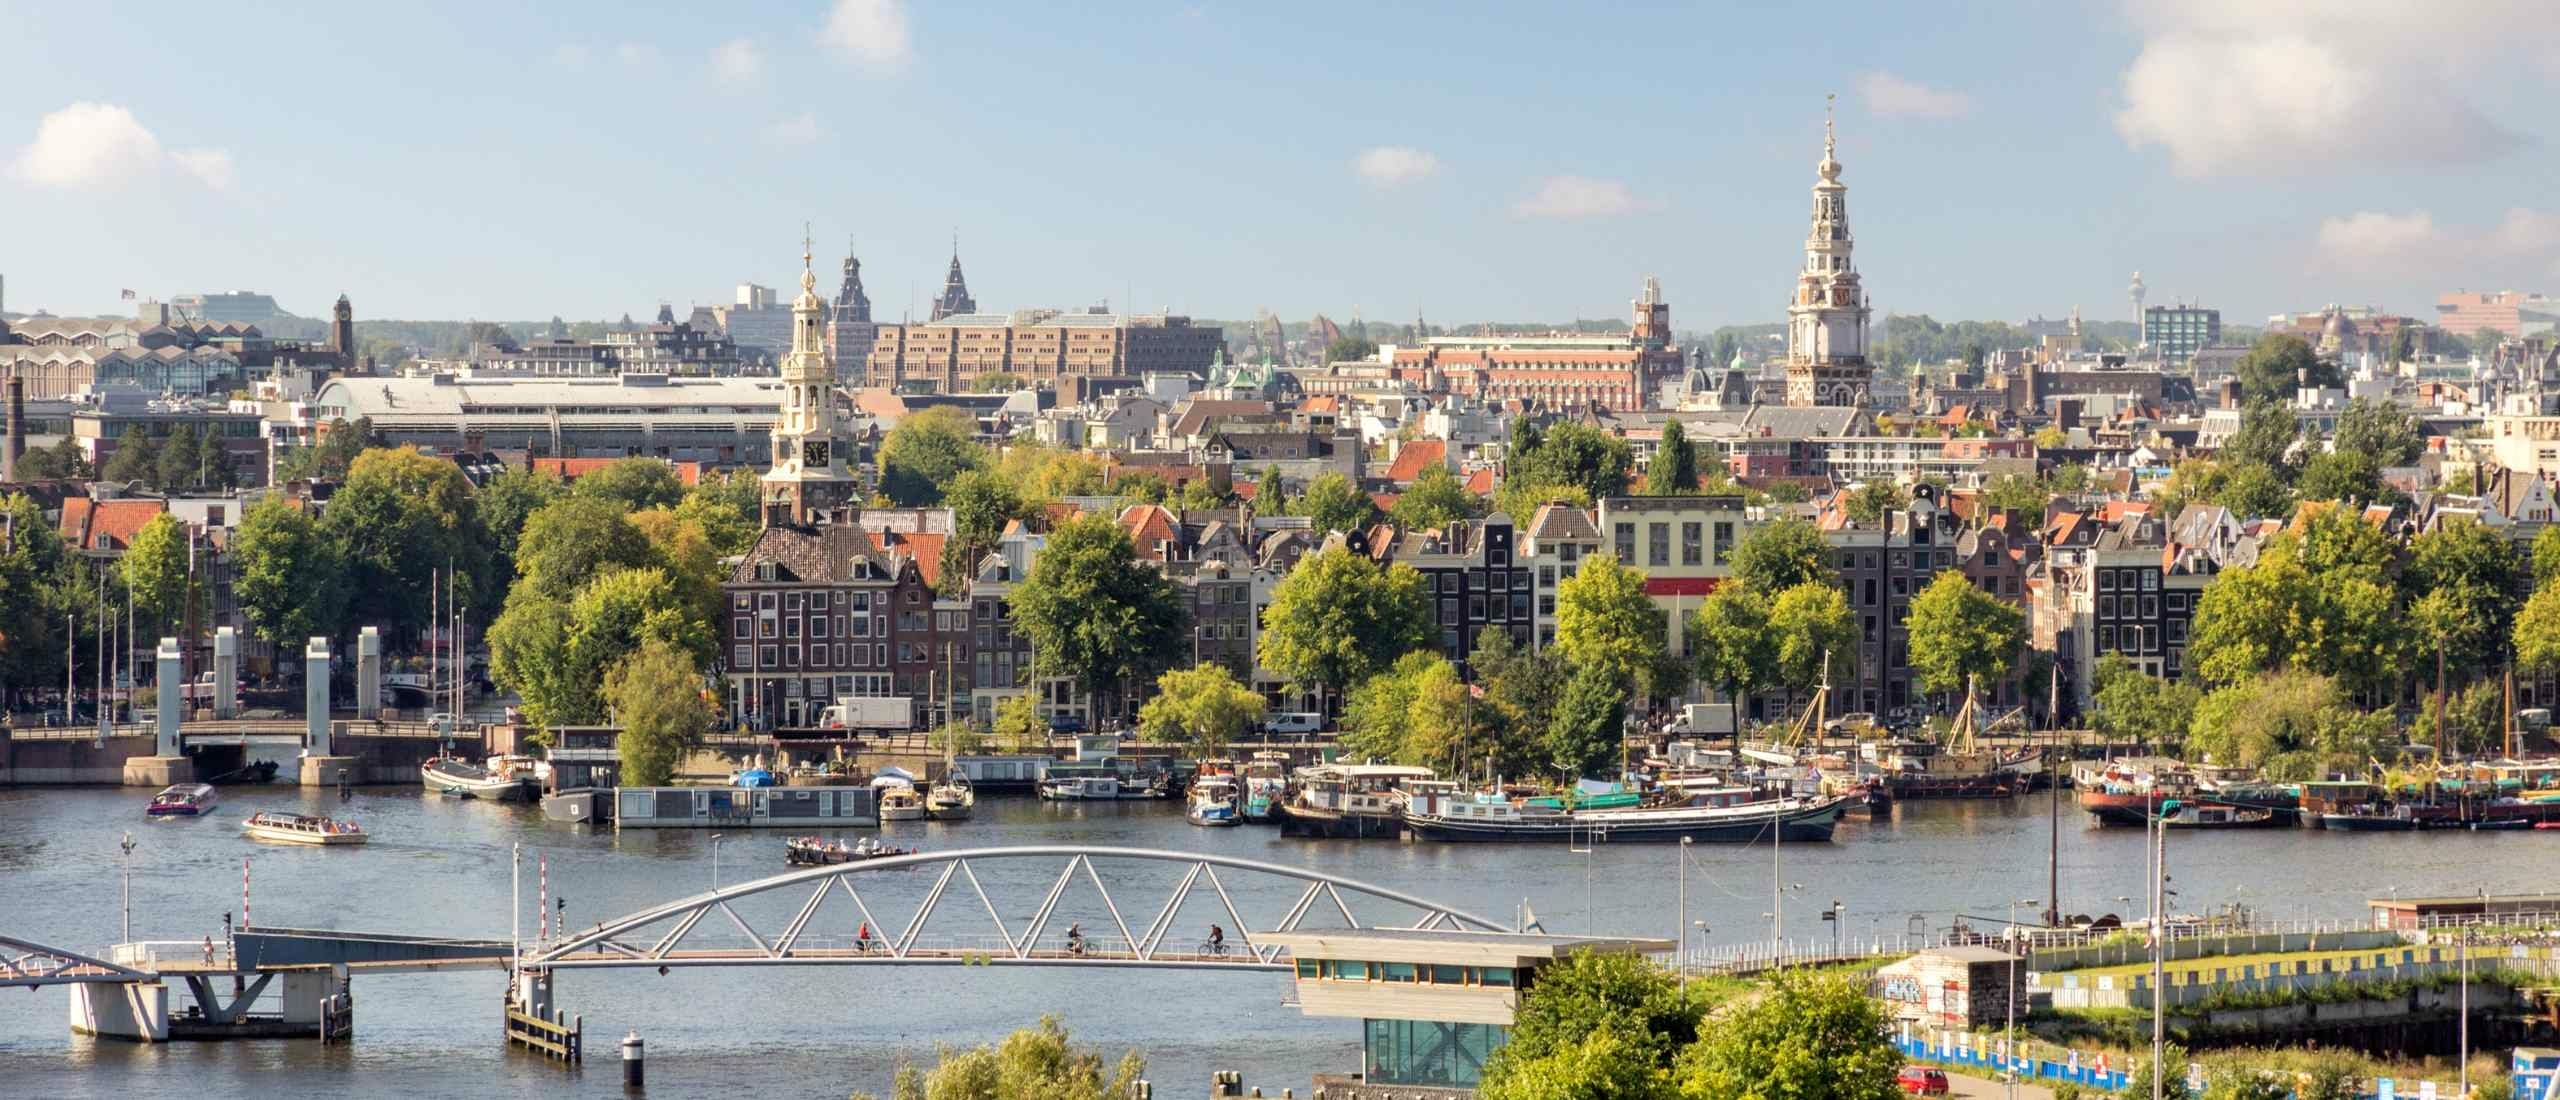 Amsterdam City Centre: Expat Guide